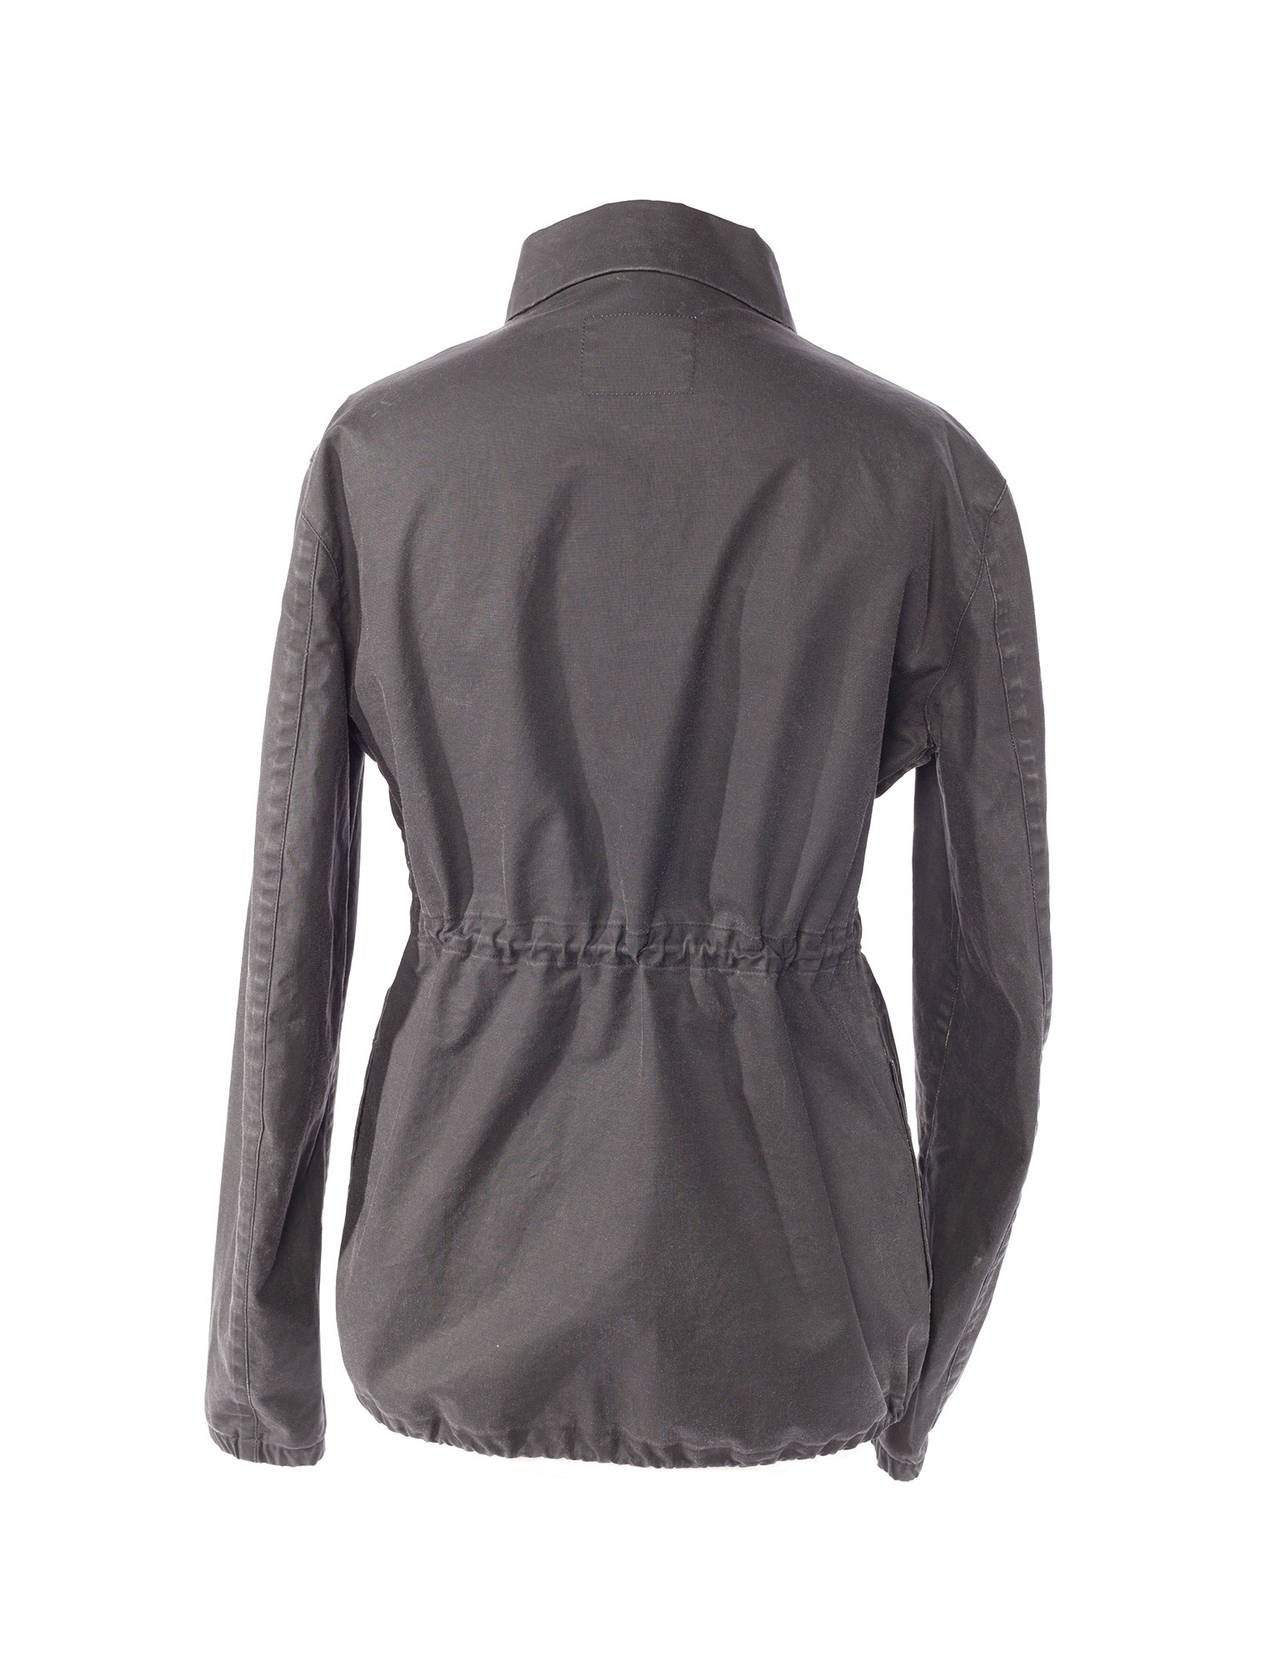 Women's Vintage Helmut Lang 1998 jacket in grey resin cotton